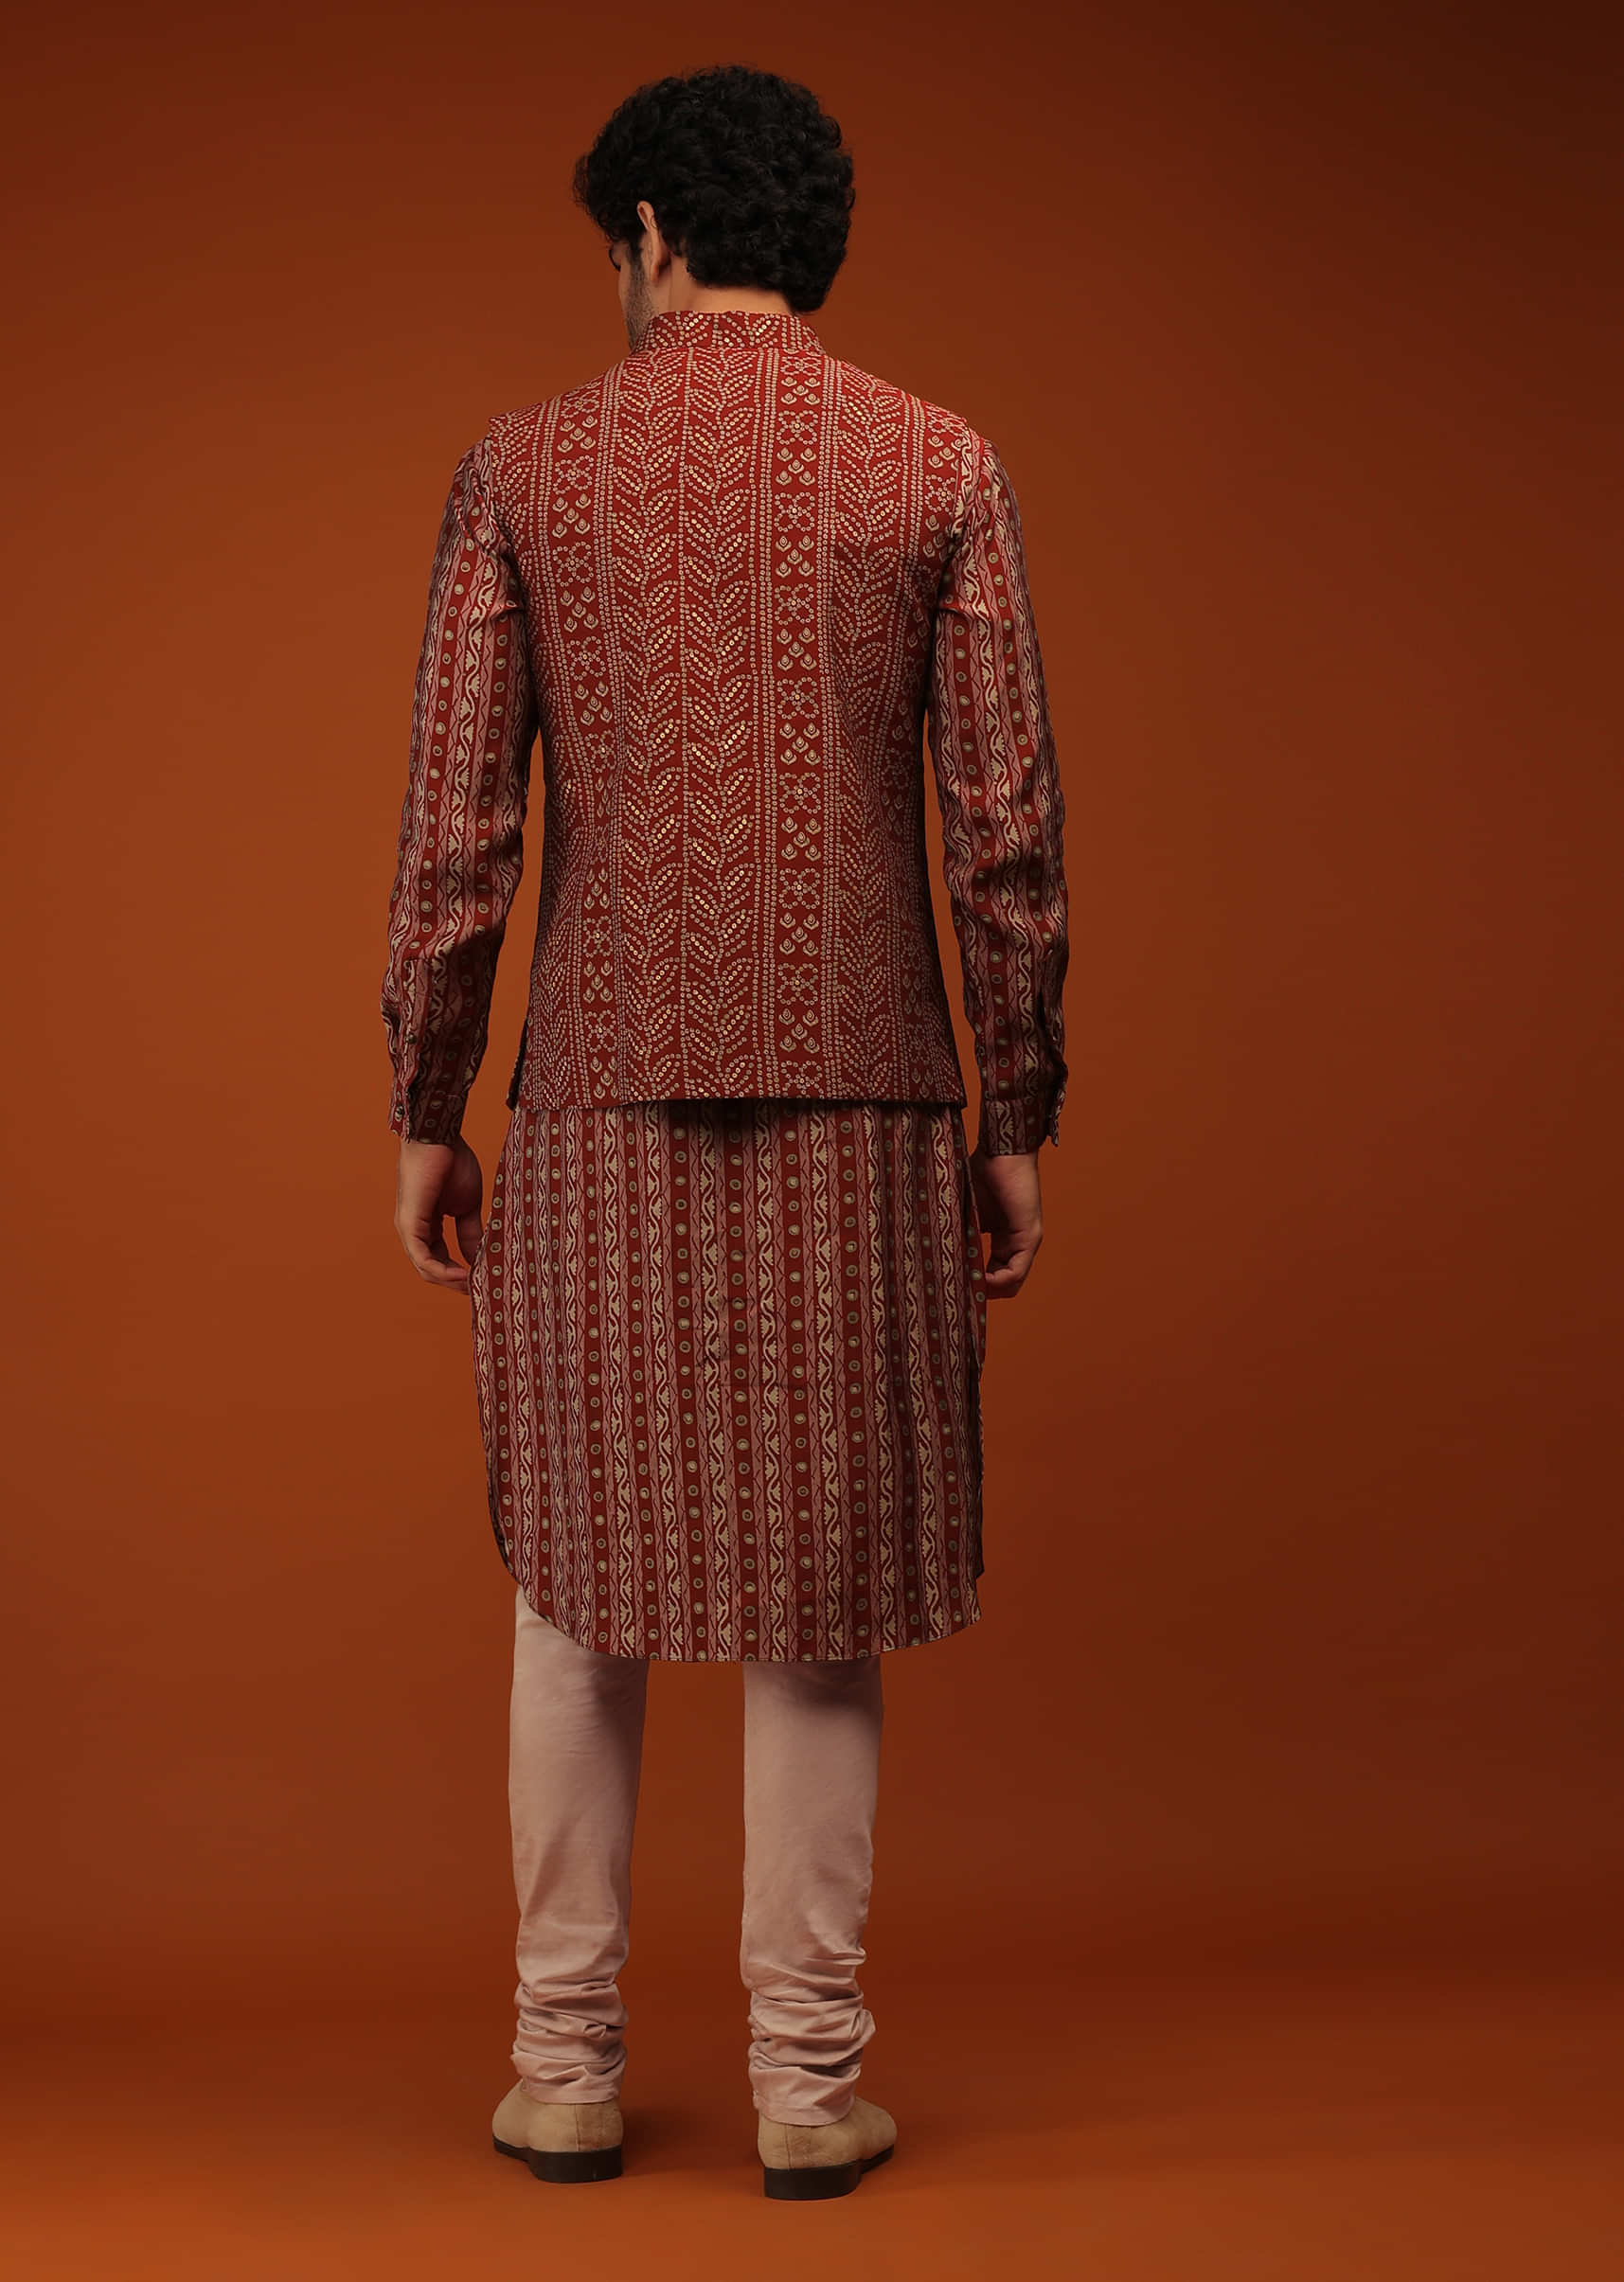 Biking Red Nehru Jacket  And Kurta Set In Bandhani Print, Matching Kurta In Hand-Block Print In Full Sleeves